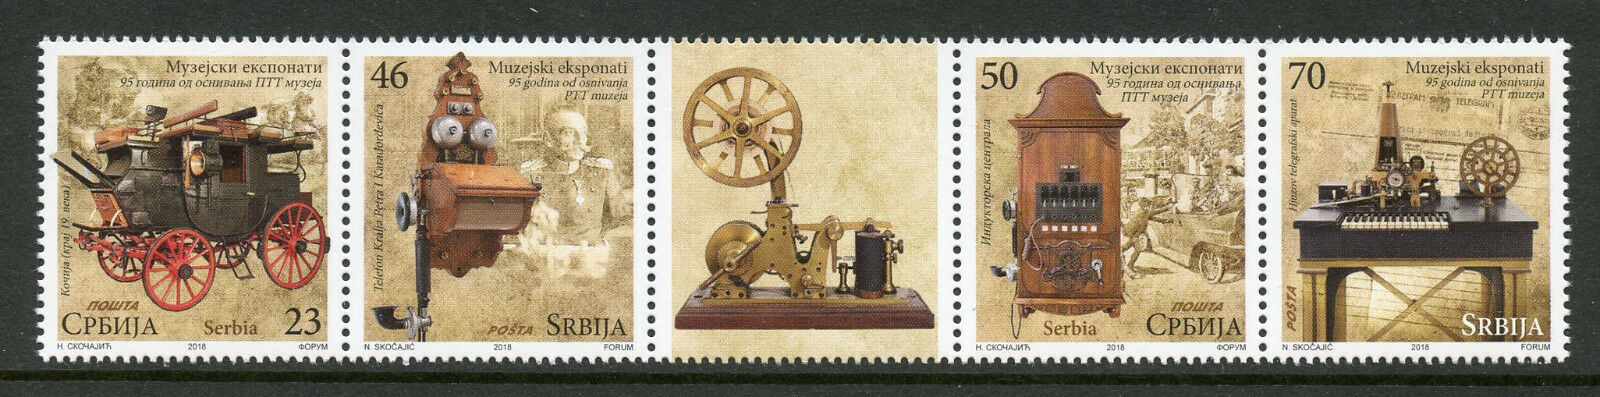 Serbia 2018 MNH PTT Postal Museum Exhibits 4v Strip Postal History Stamps